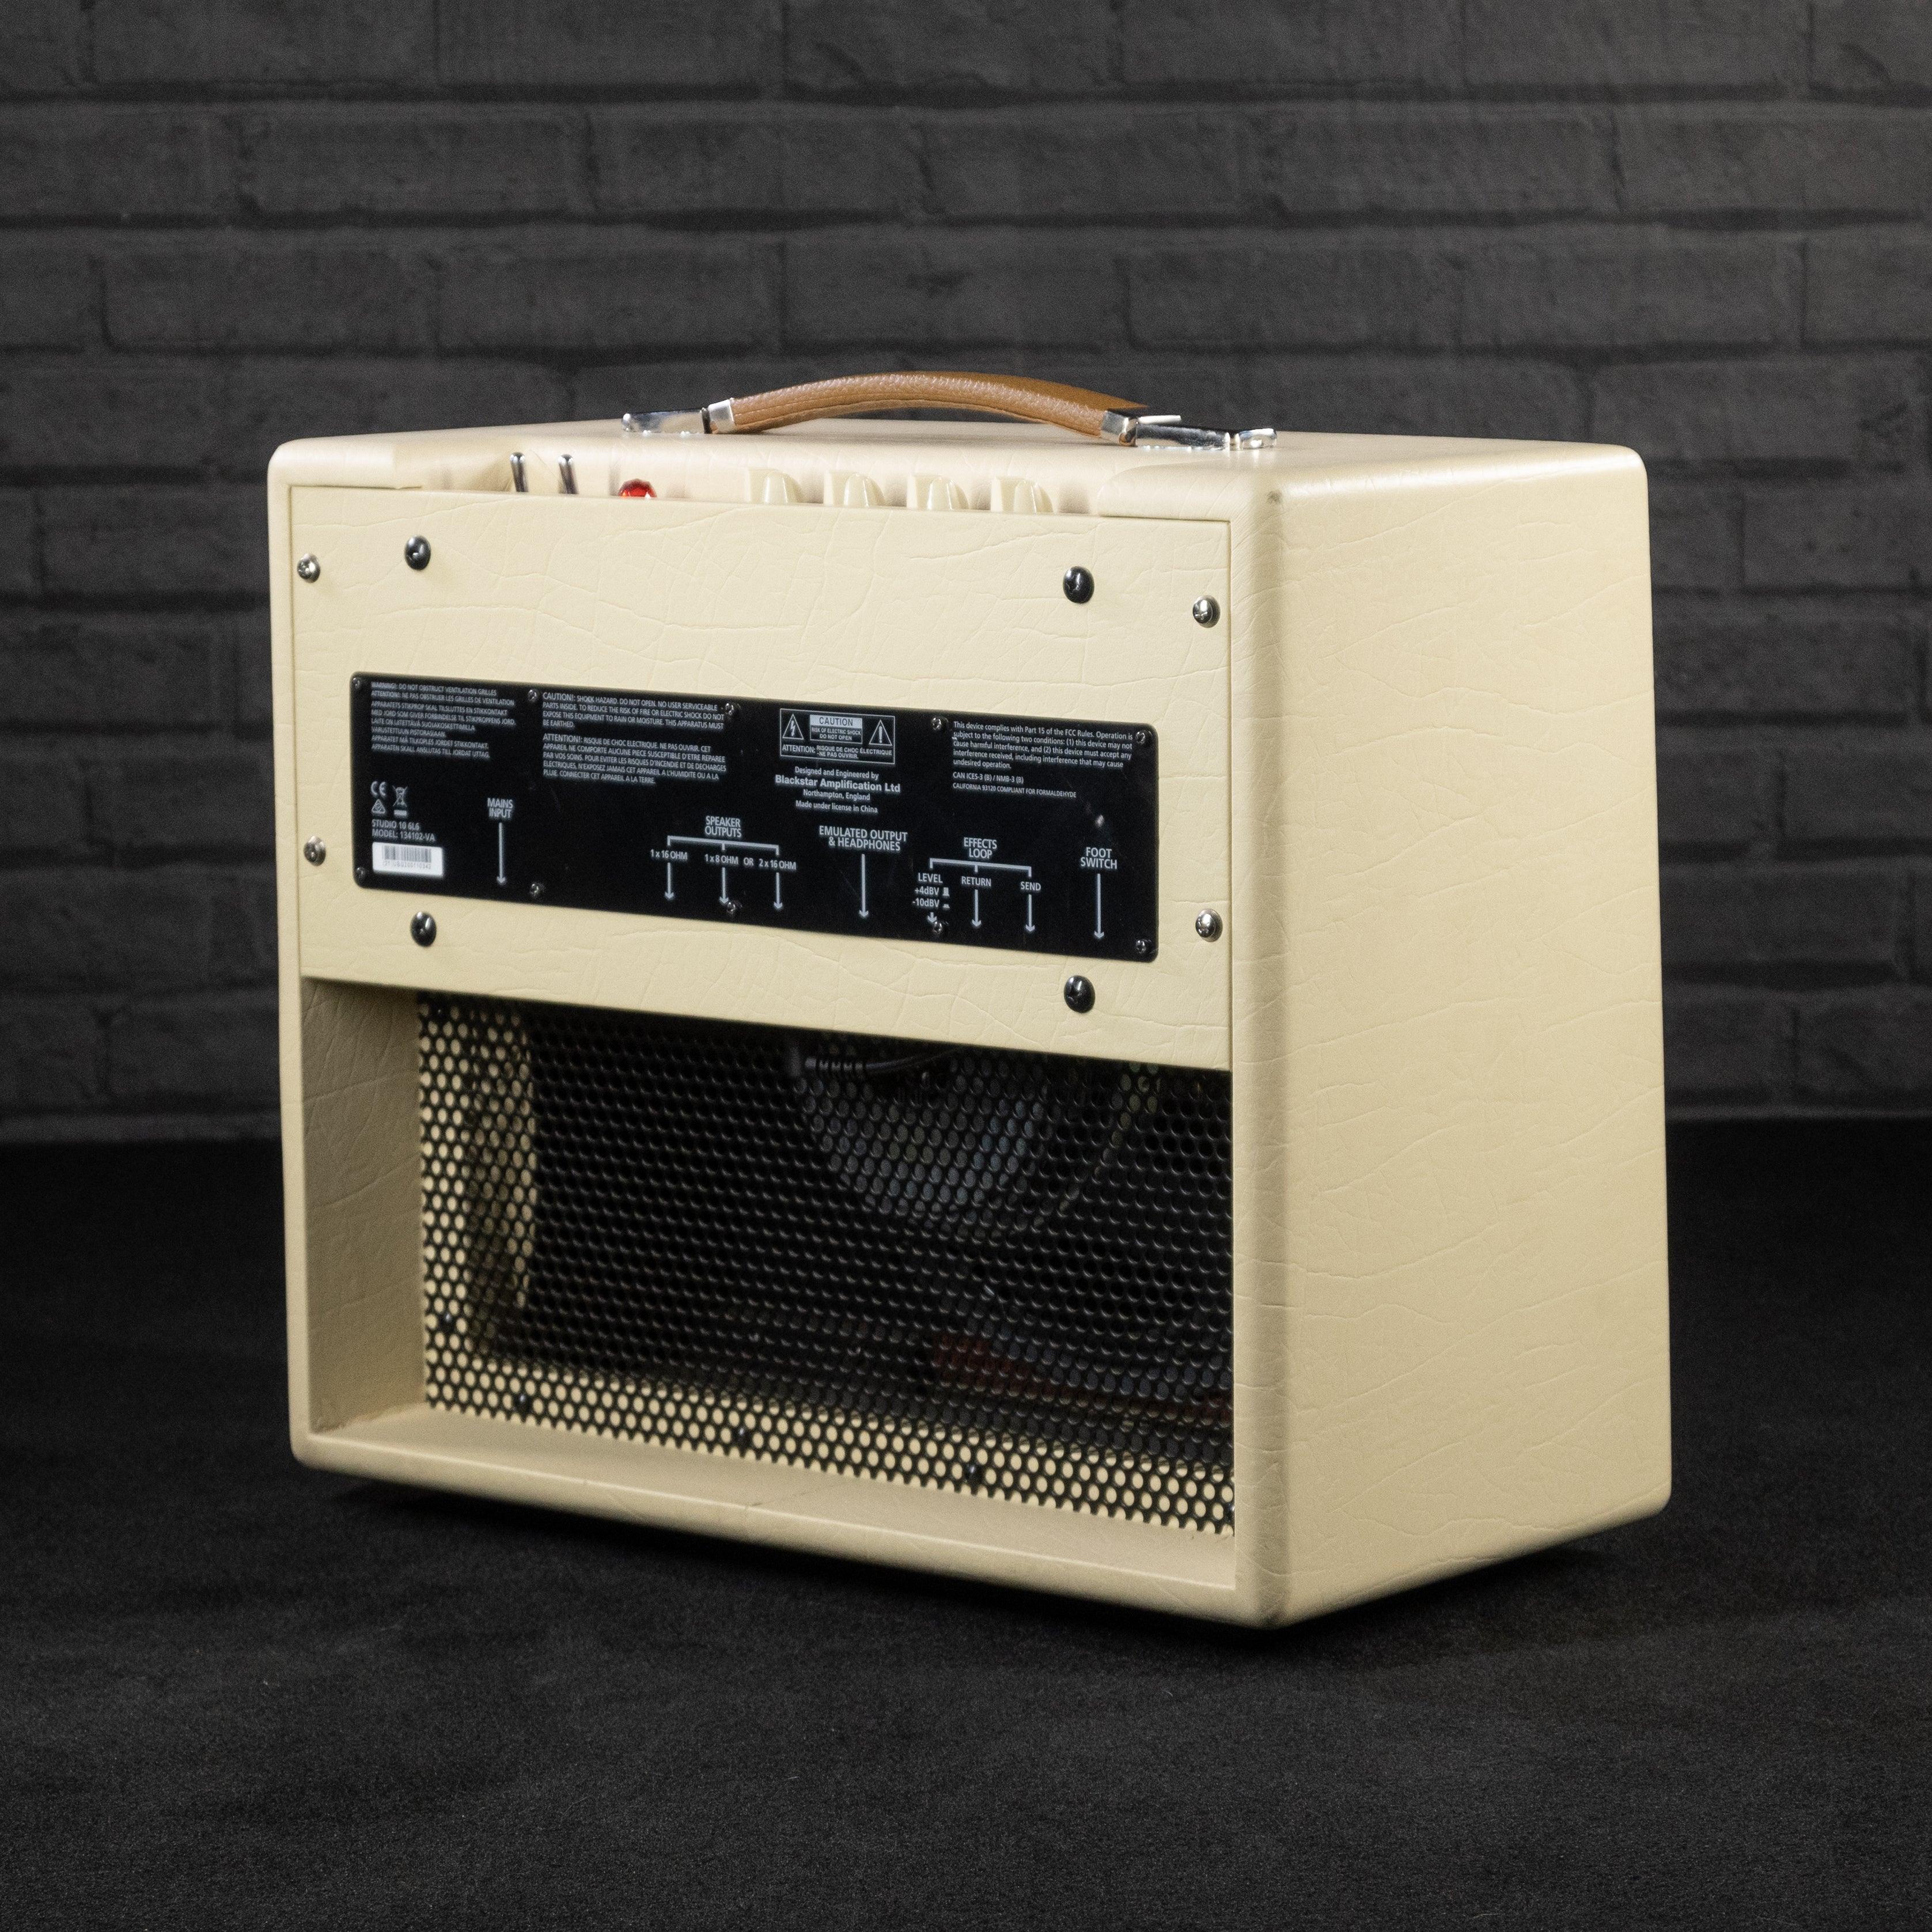 Blackstar Studio 10 6L6 Combo Amplifier USED - Impulse Music Co.